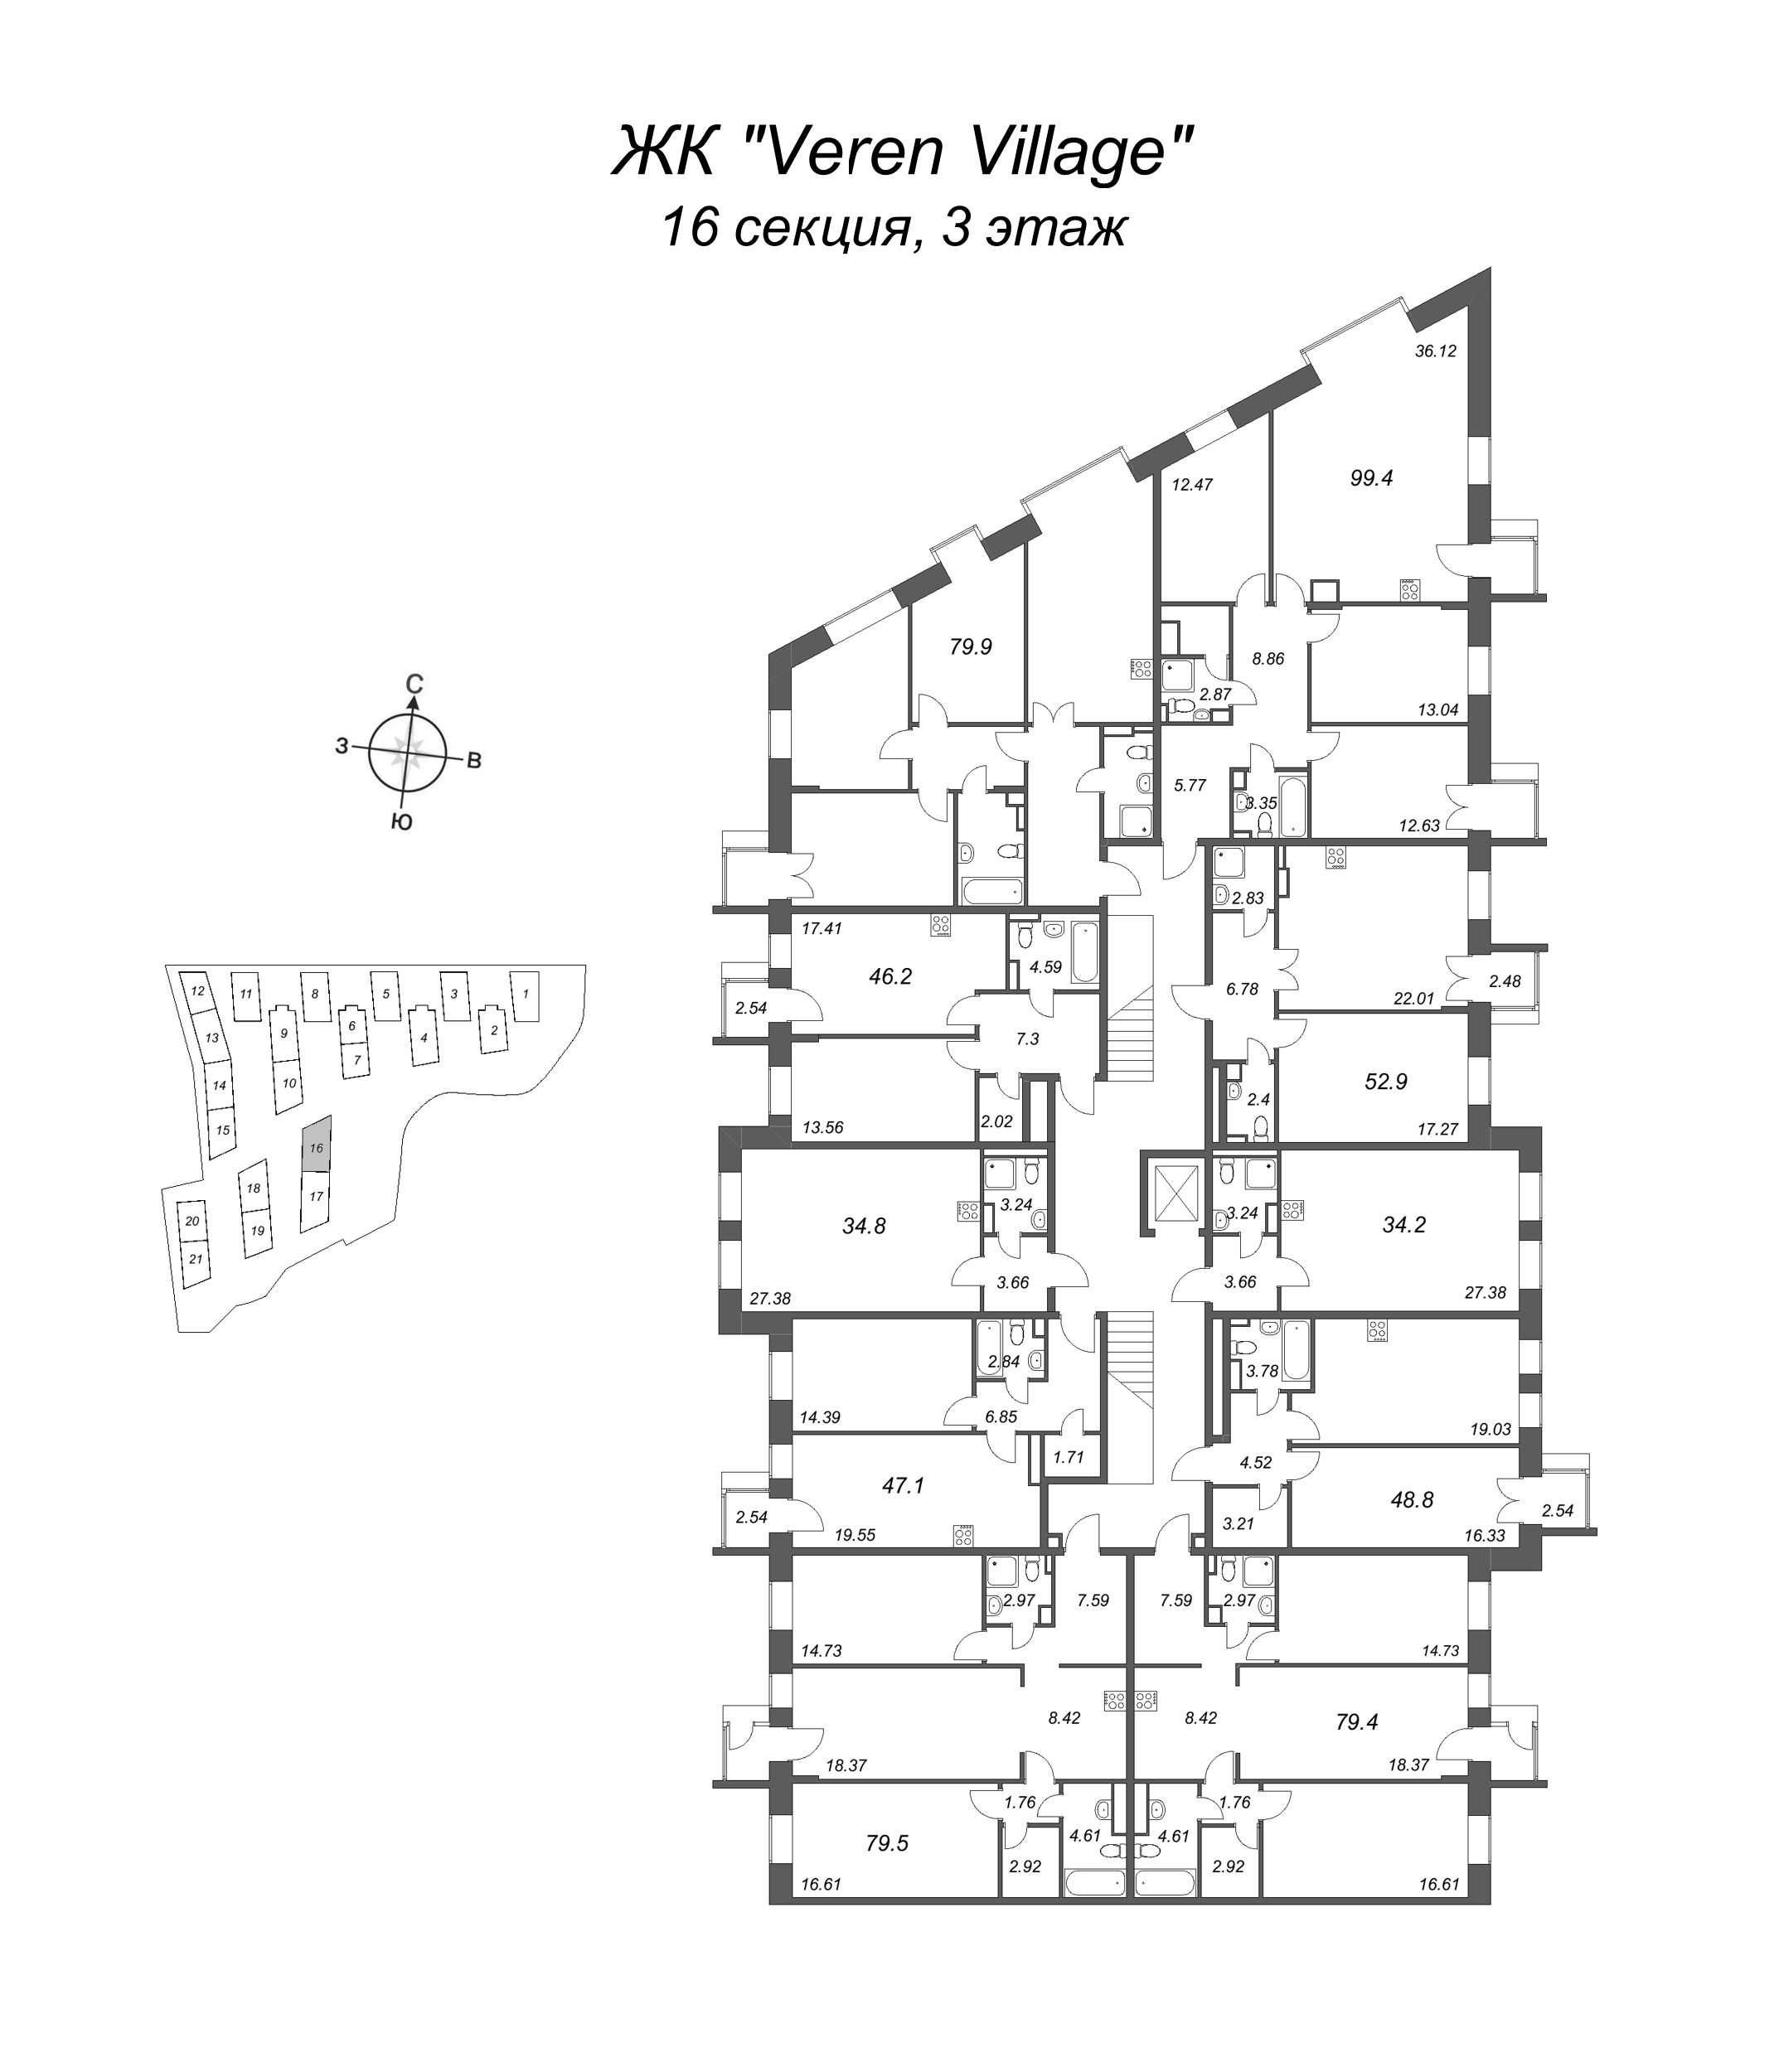 4-комнатная (Евро) квартира, 99.4 м² - планировка этажа